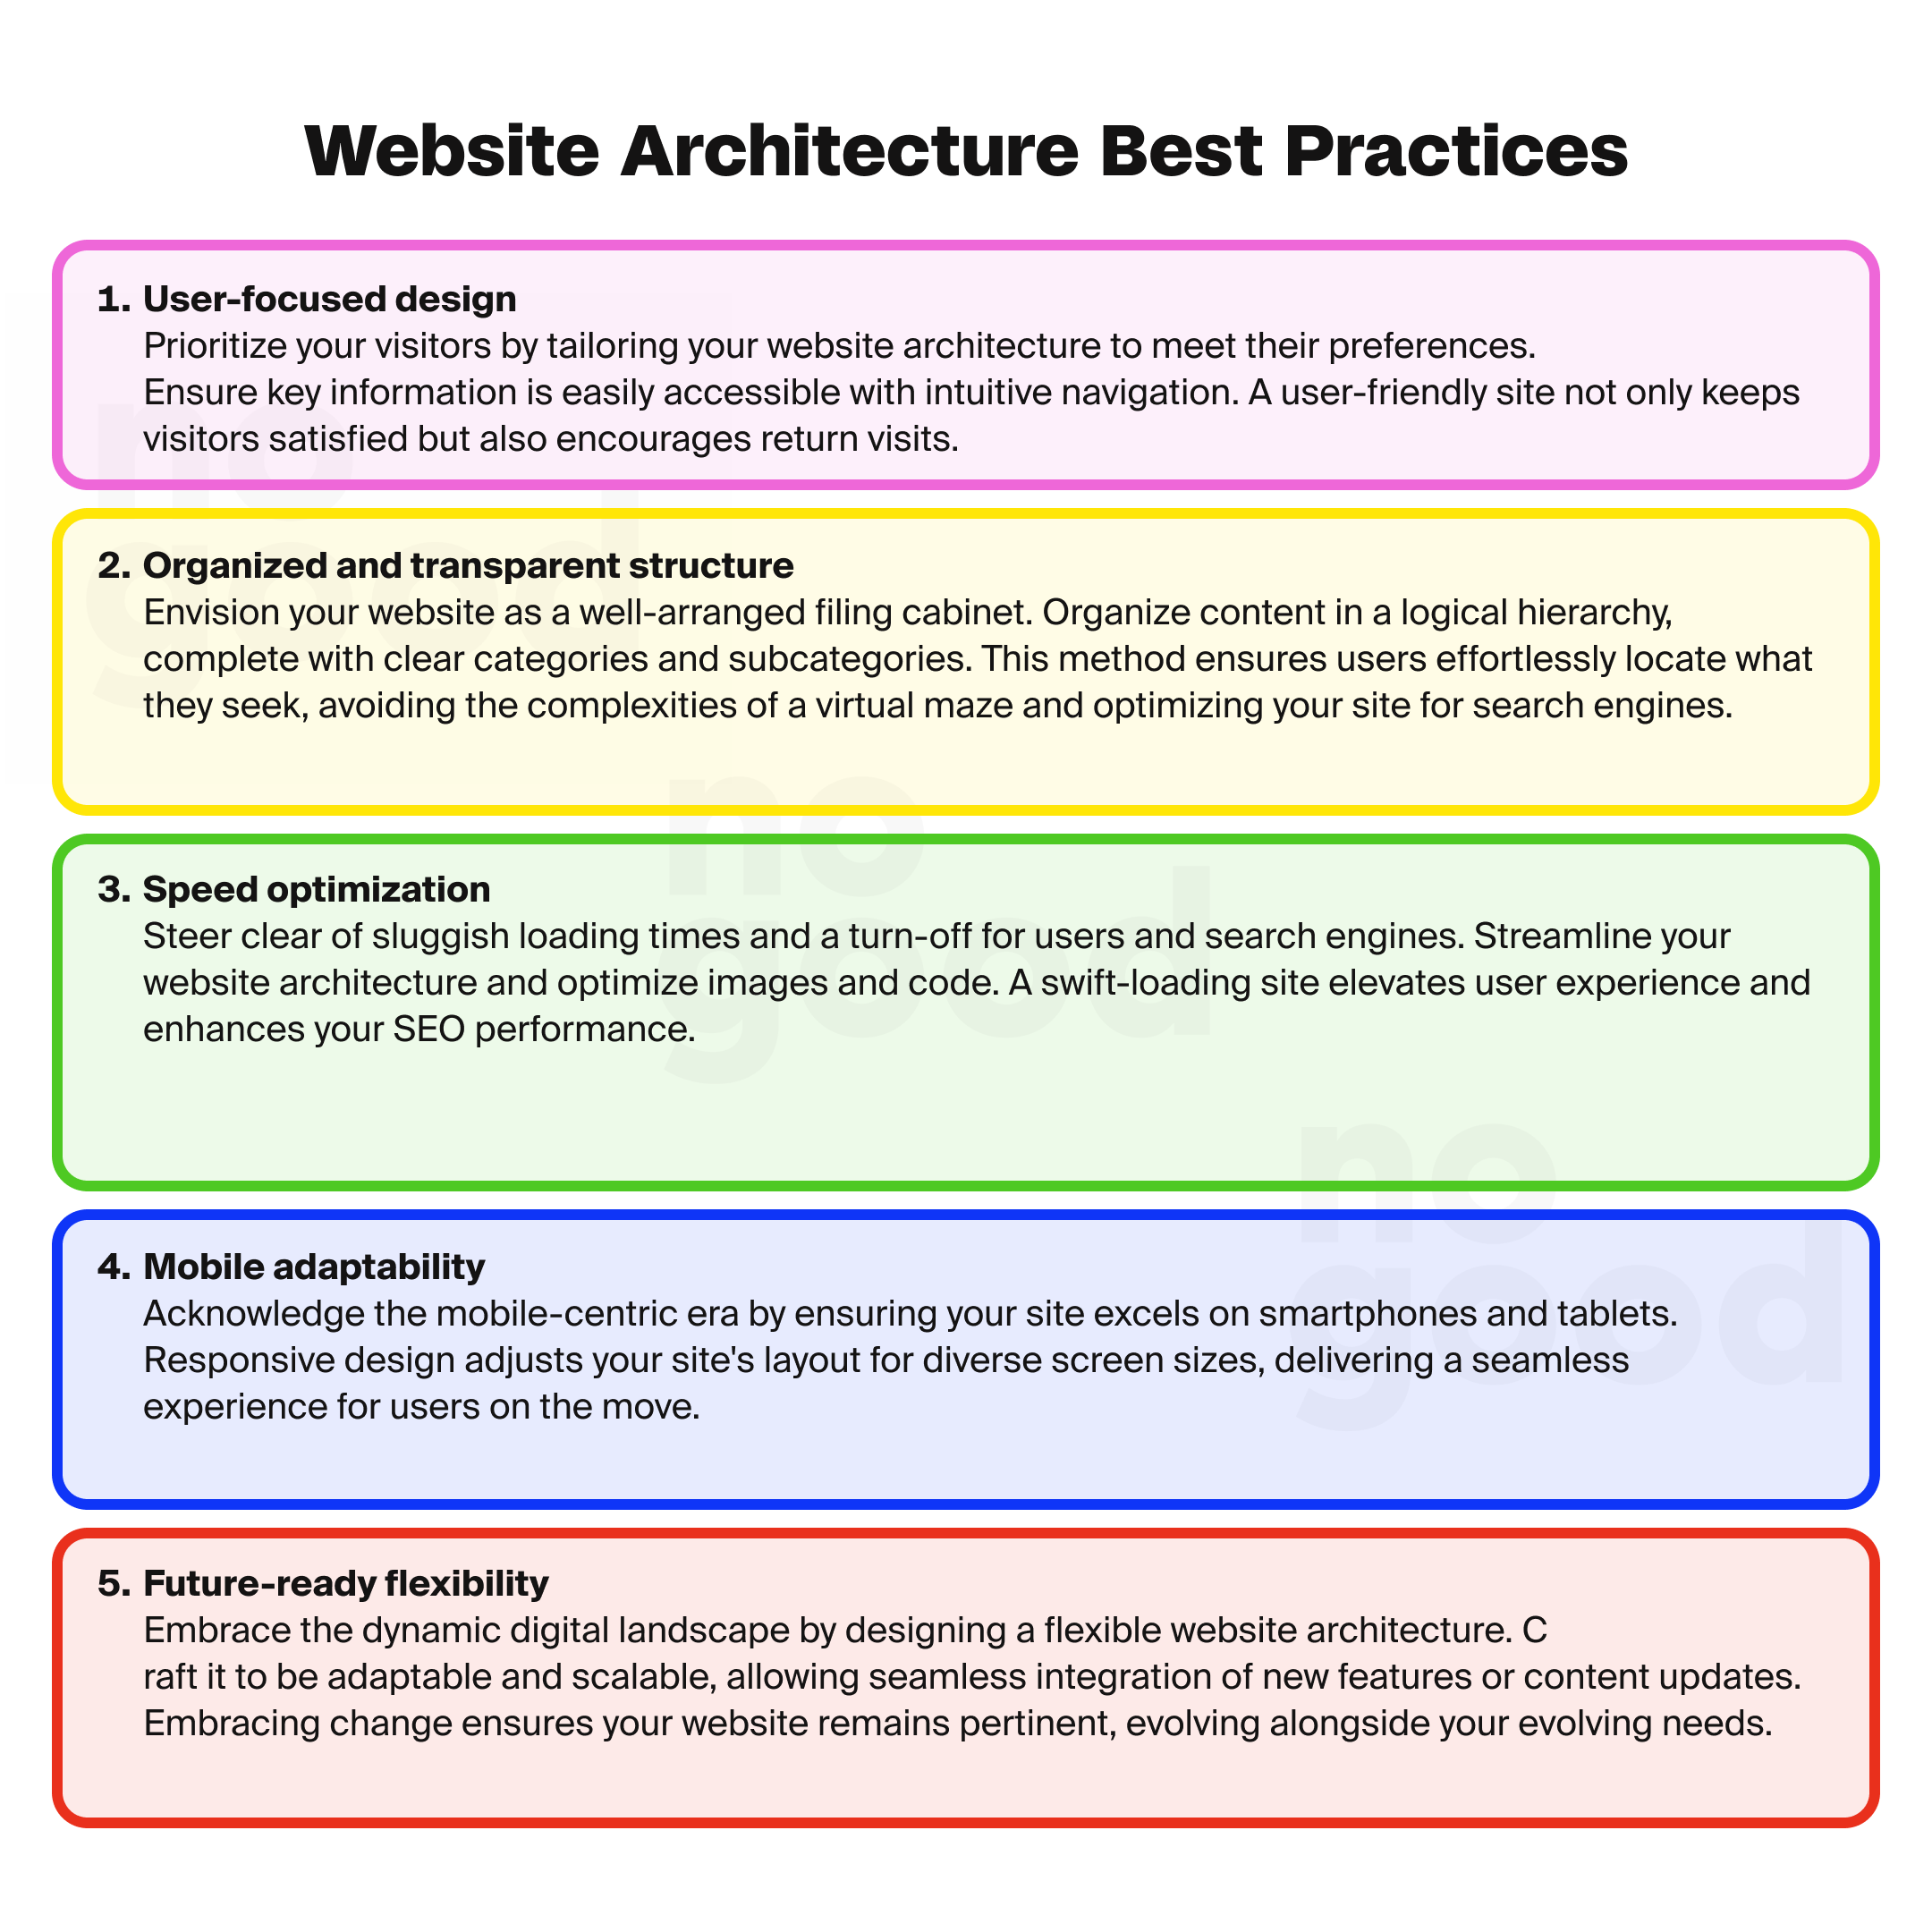 Website architecture best practices